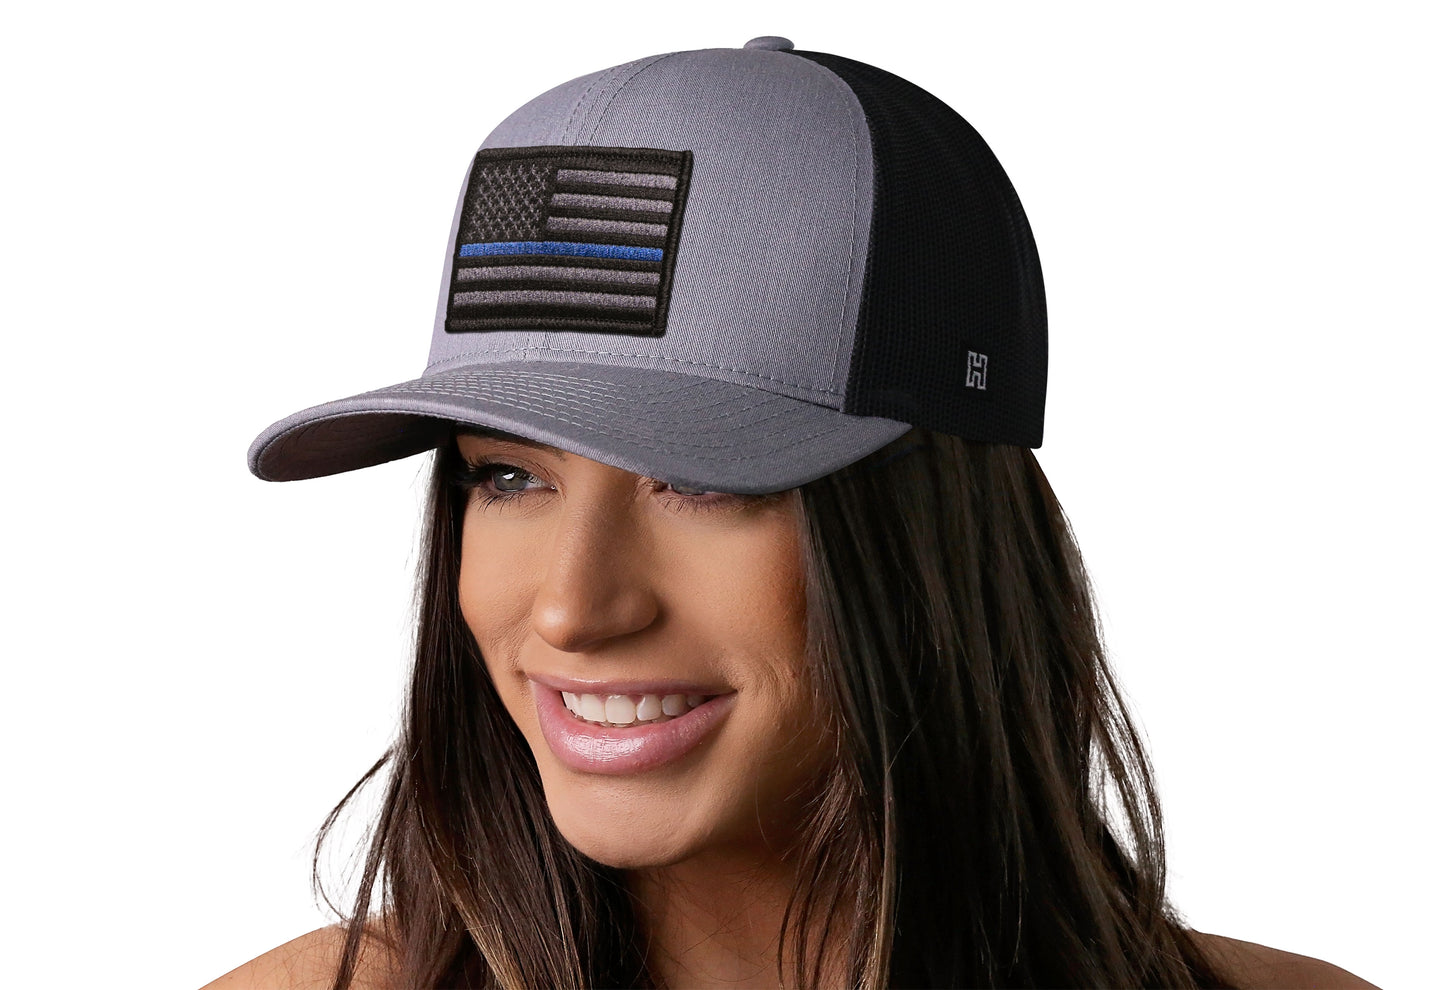 Thin Blue Line Trucker Hat  |  Gray Black Police Snapback